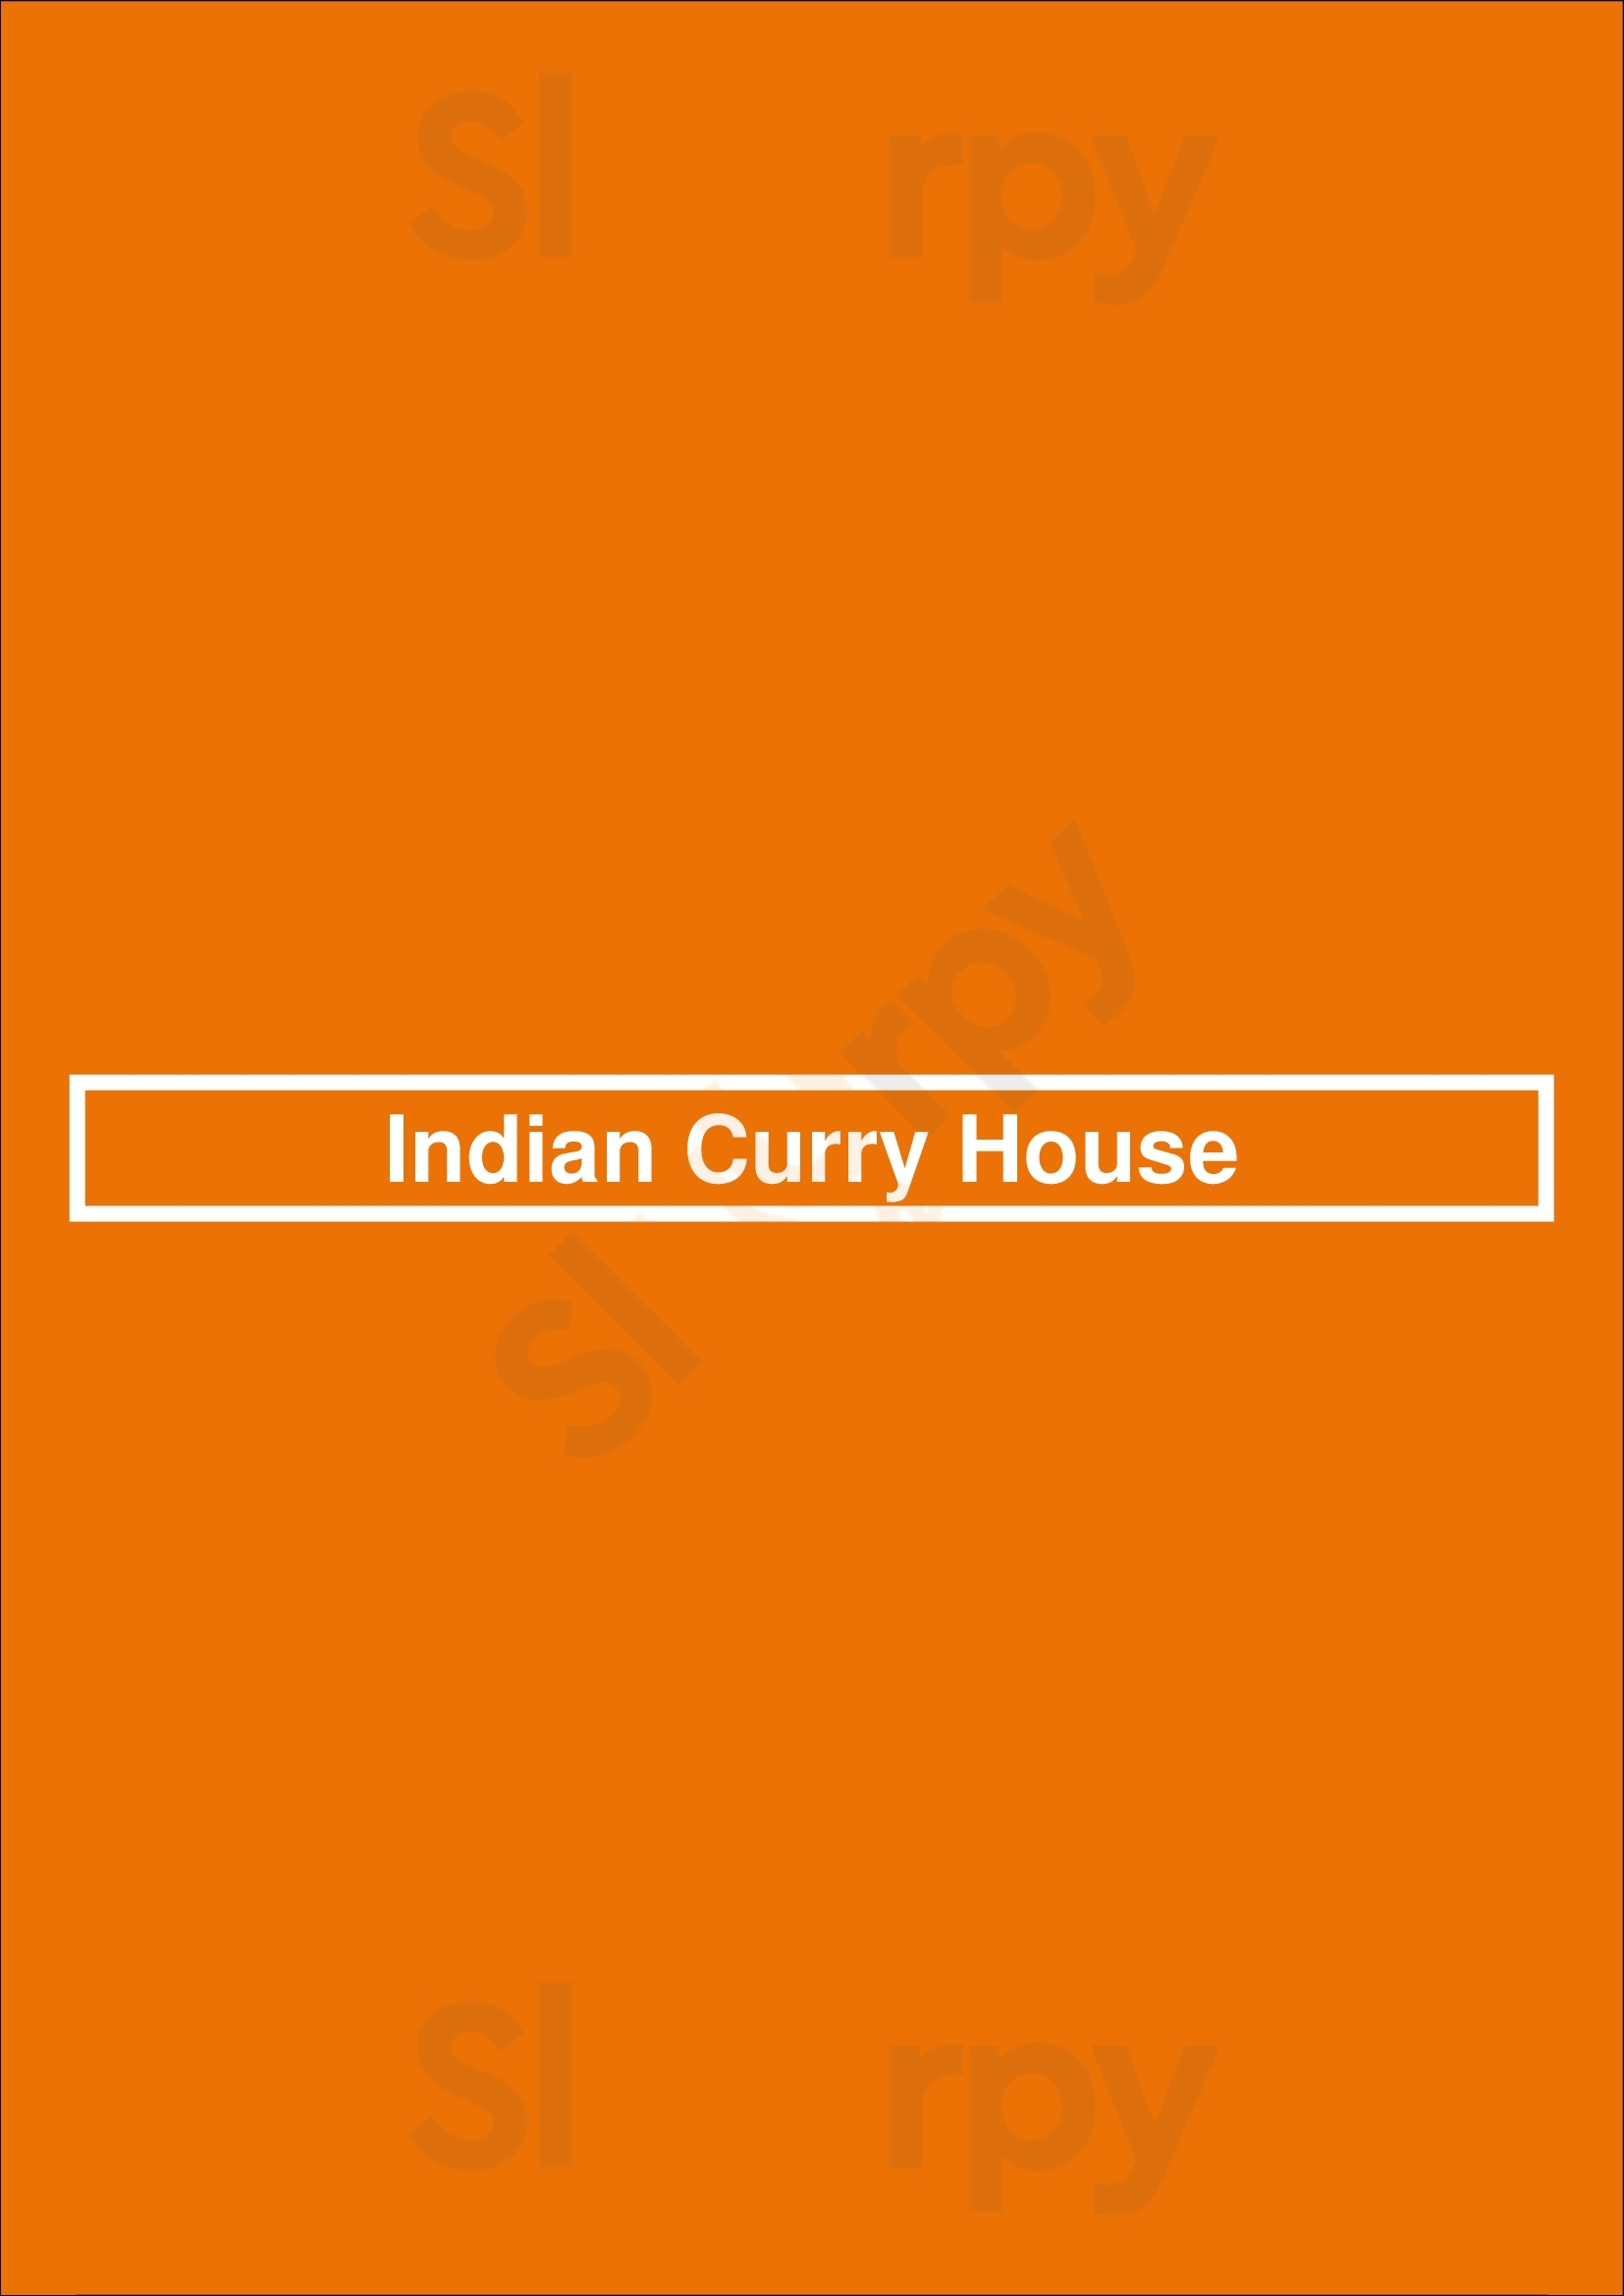 Indian Curry House Den Haag Menu - 1